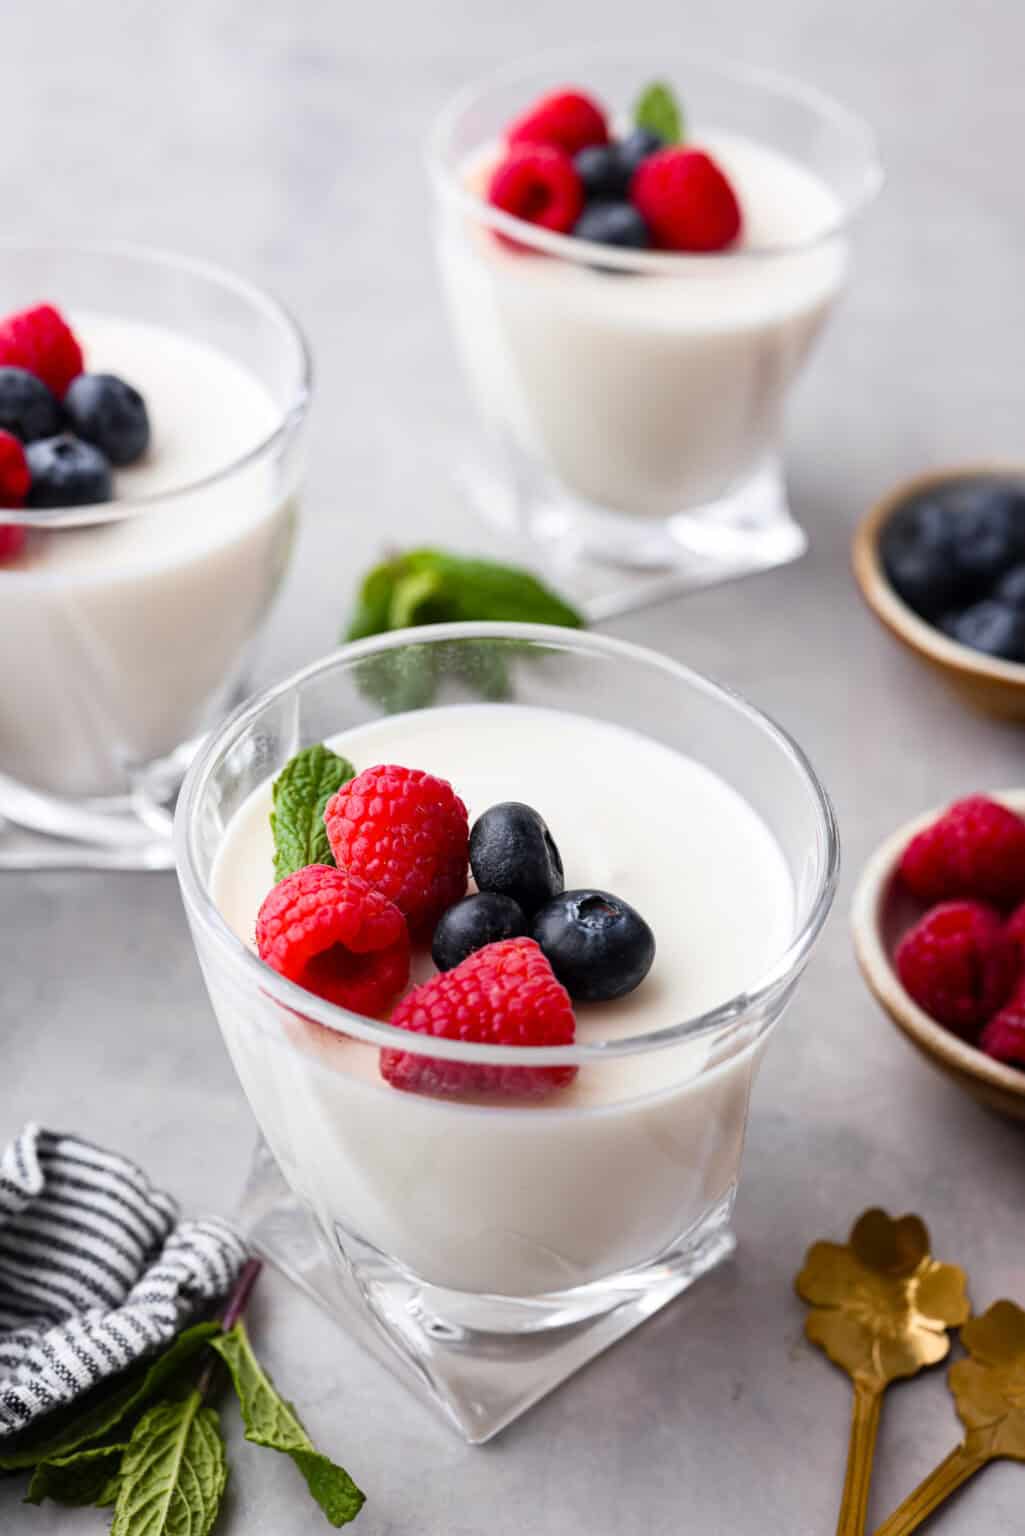 Swedish Cream with Berries | The Recipe Critic